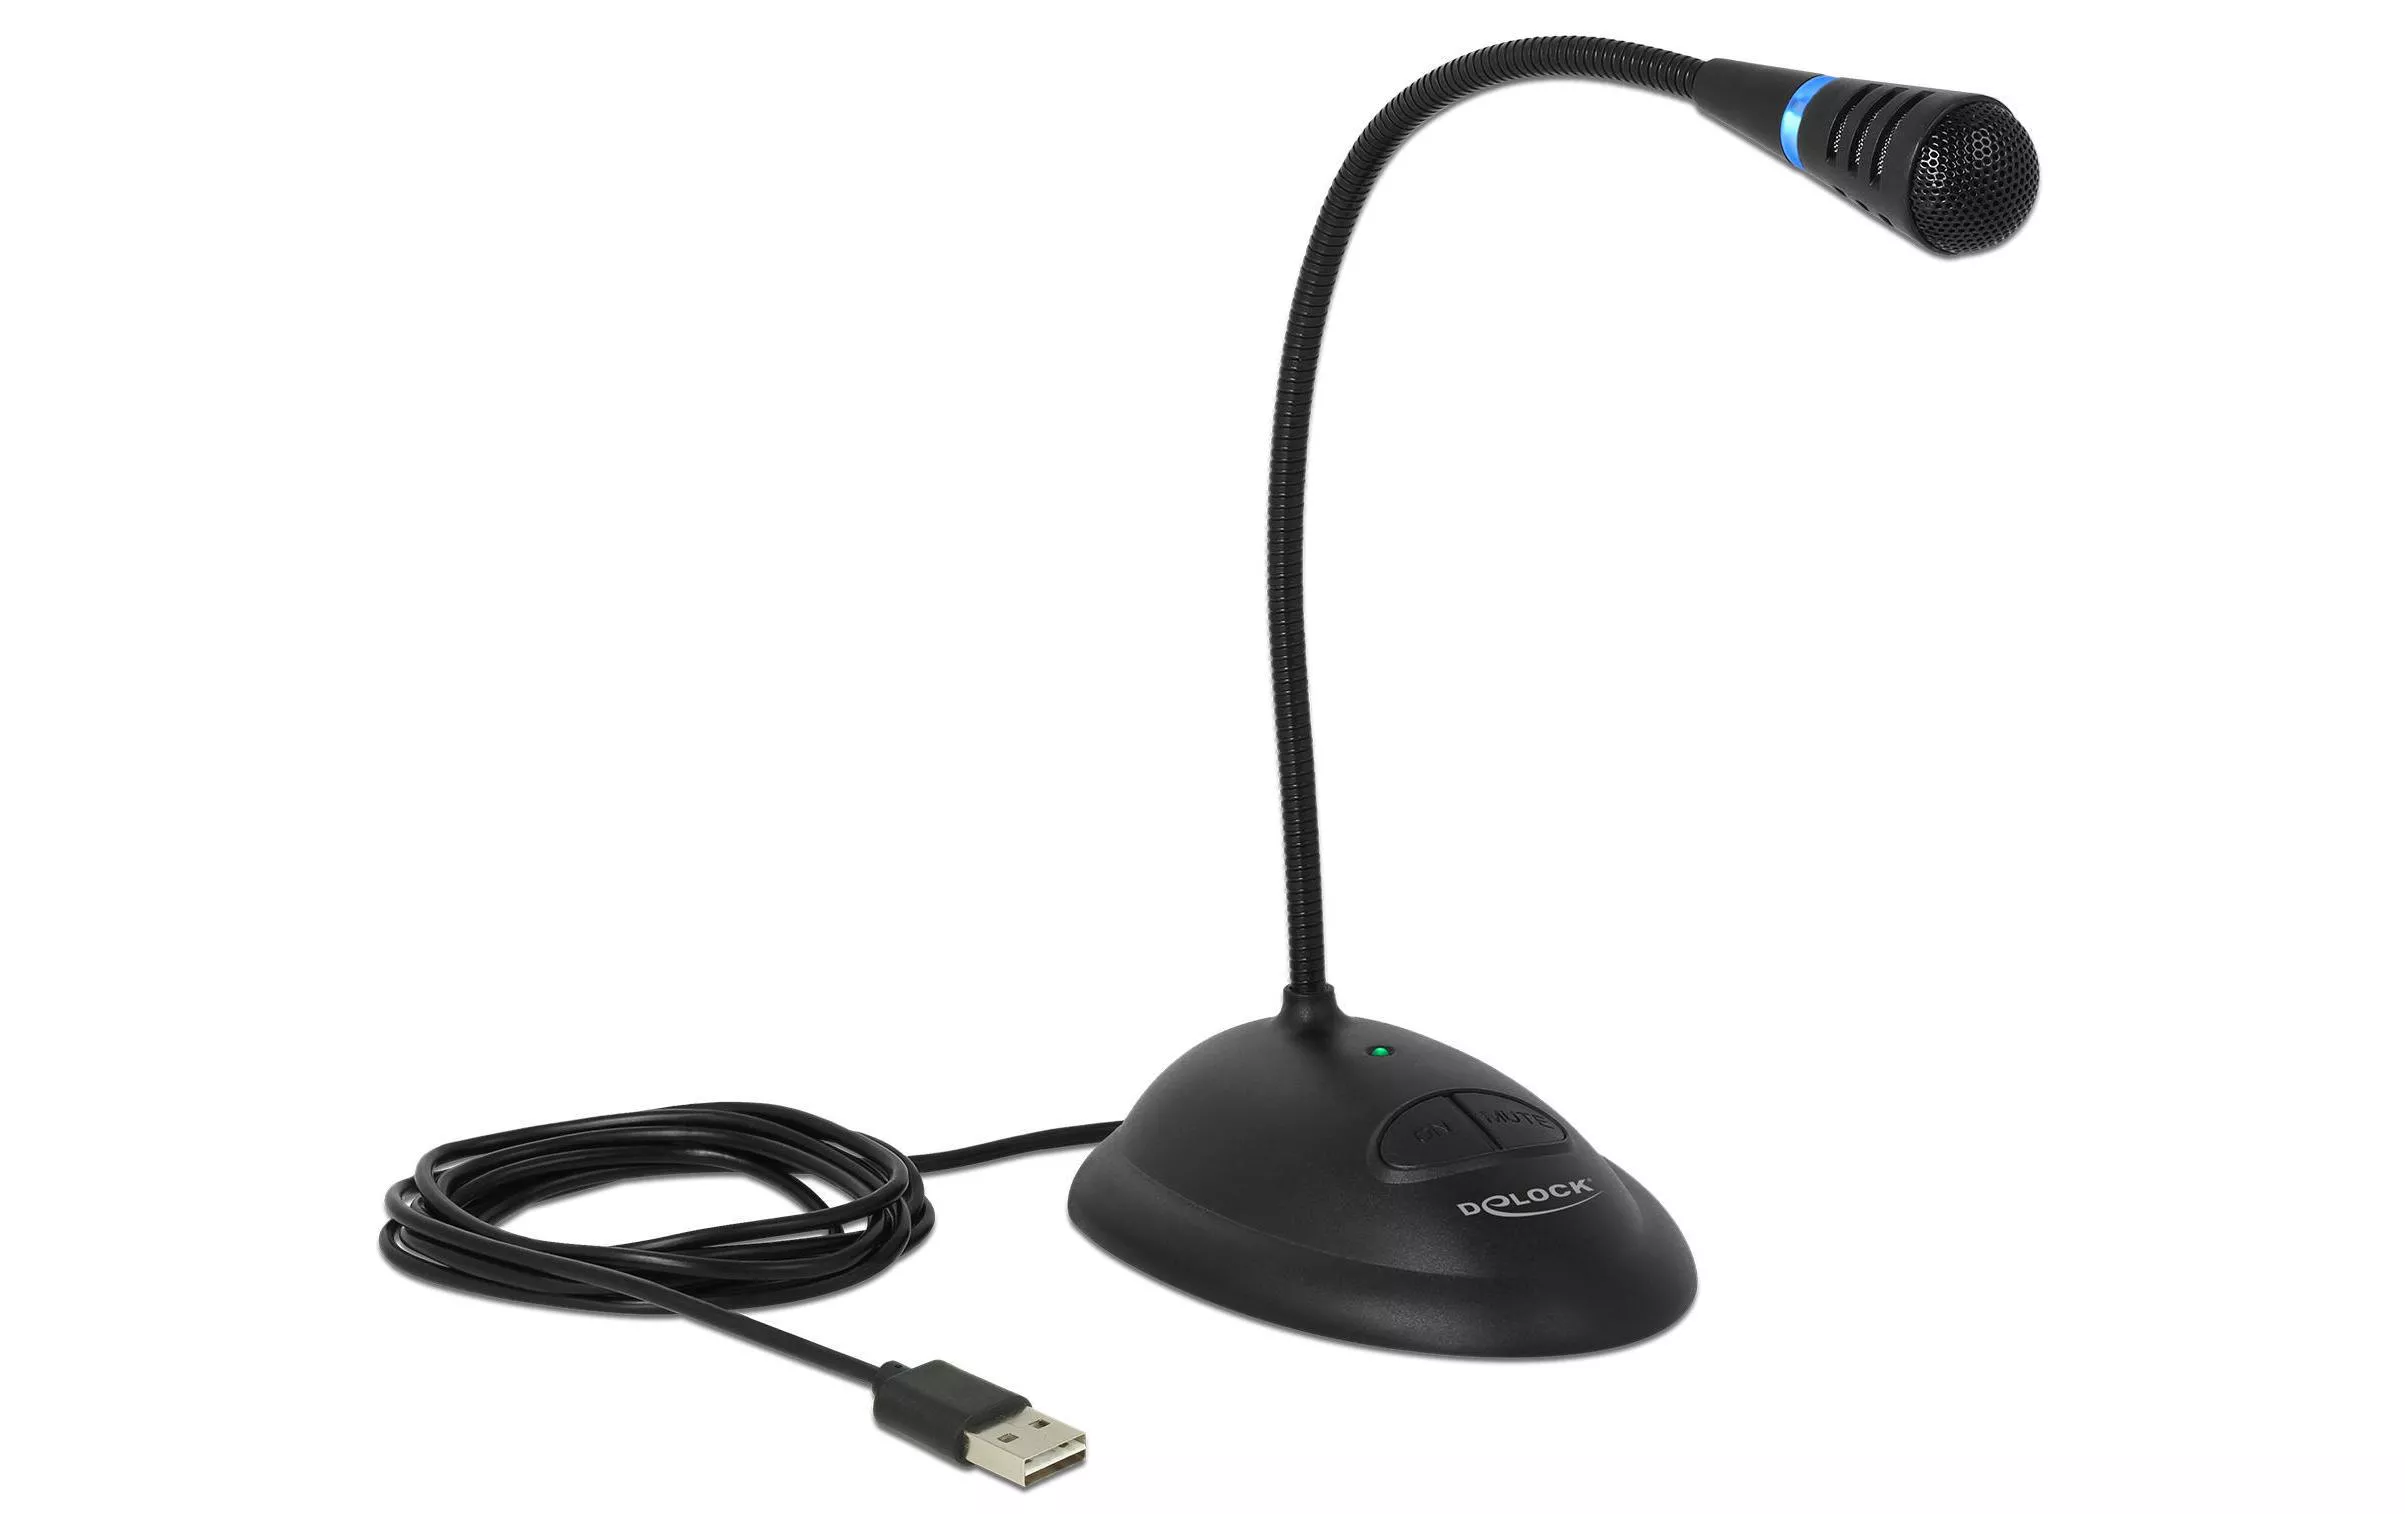 Mikrofon USB mit Mute- und On/Off-Taste